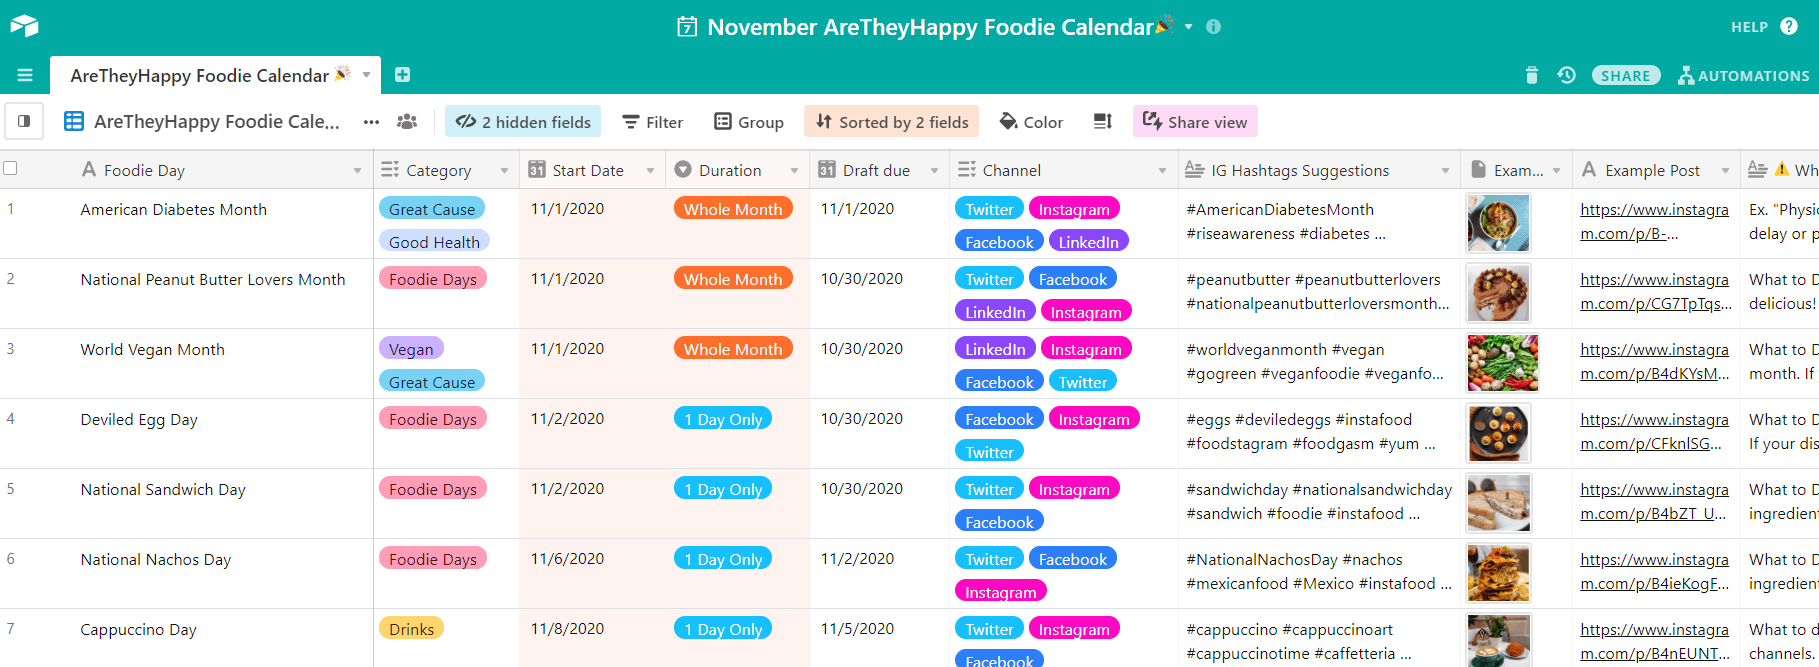 Foodie Days Calendar November social media inspiration